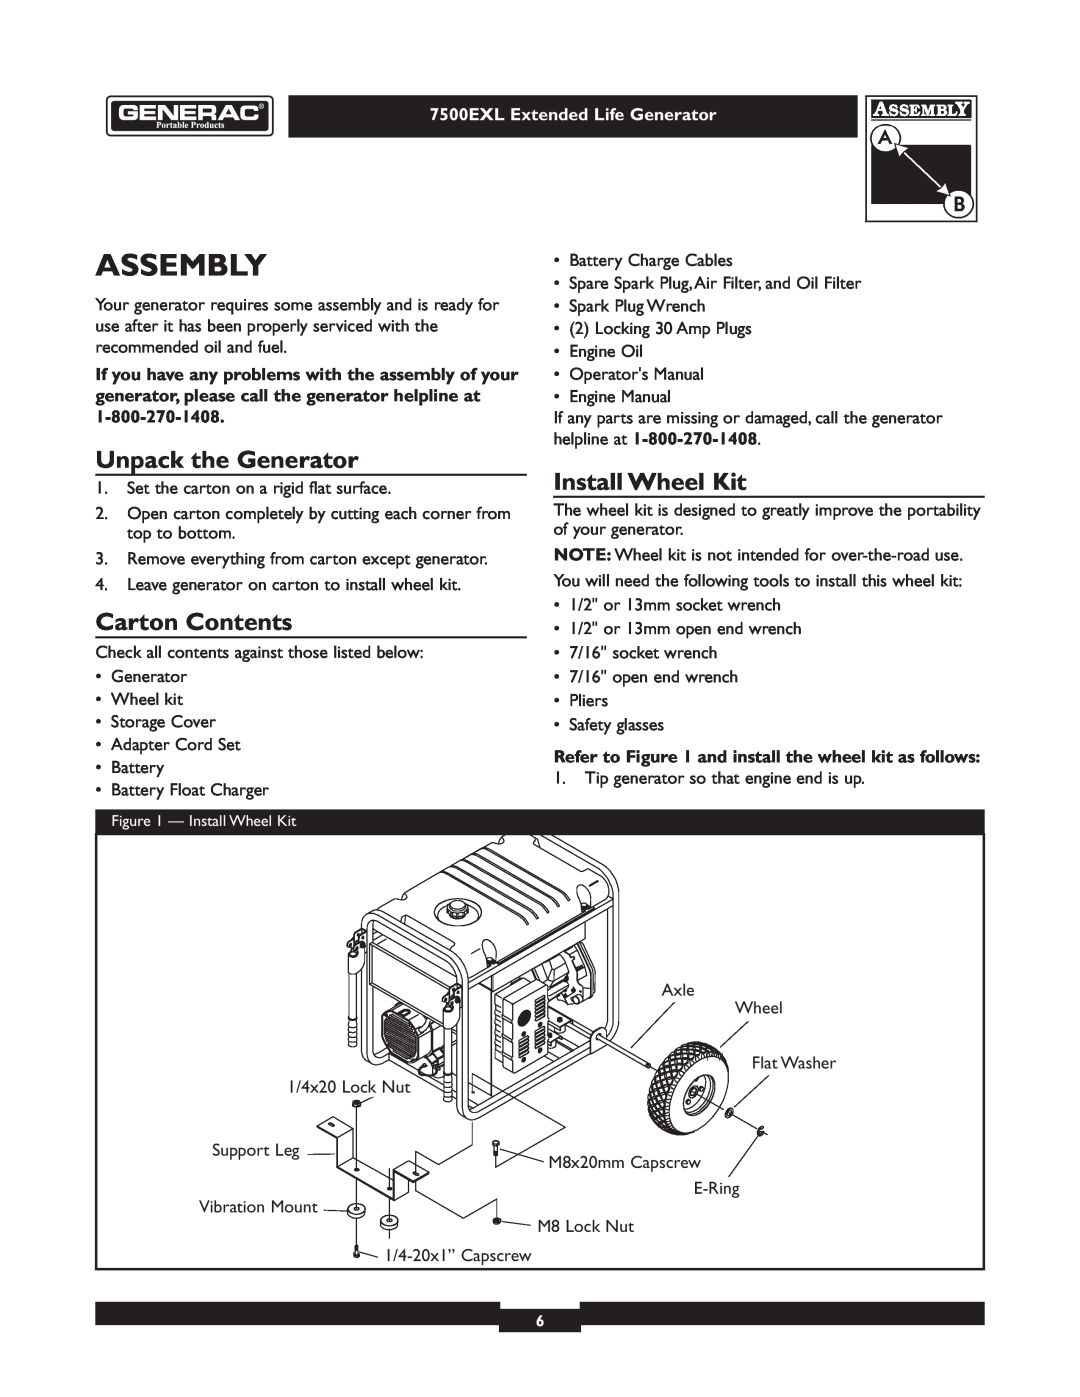 Generac 101 9-3 Assembly, Unpack the Generator, Carton Contents, Install Wheel Kit, 7500EXL Extended Life Generator 